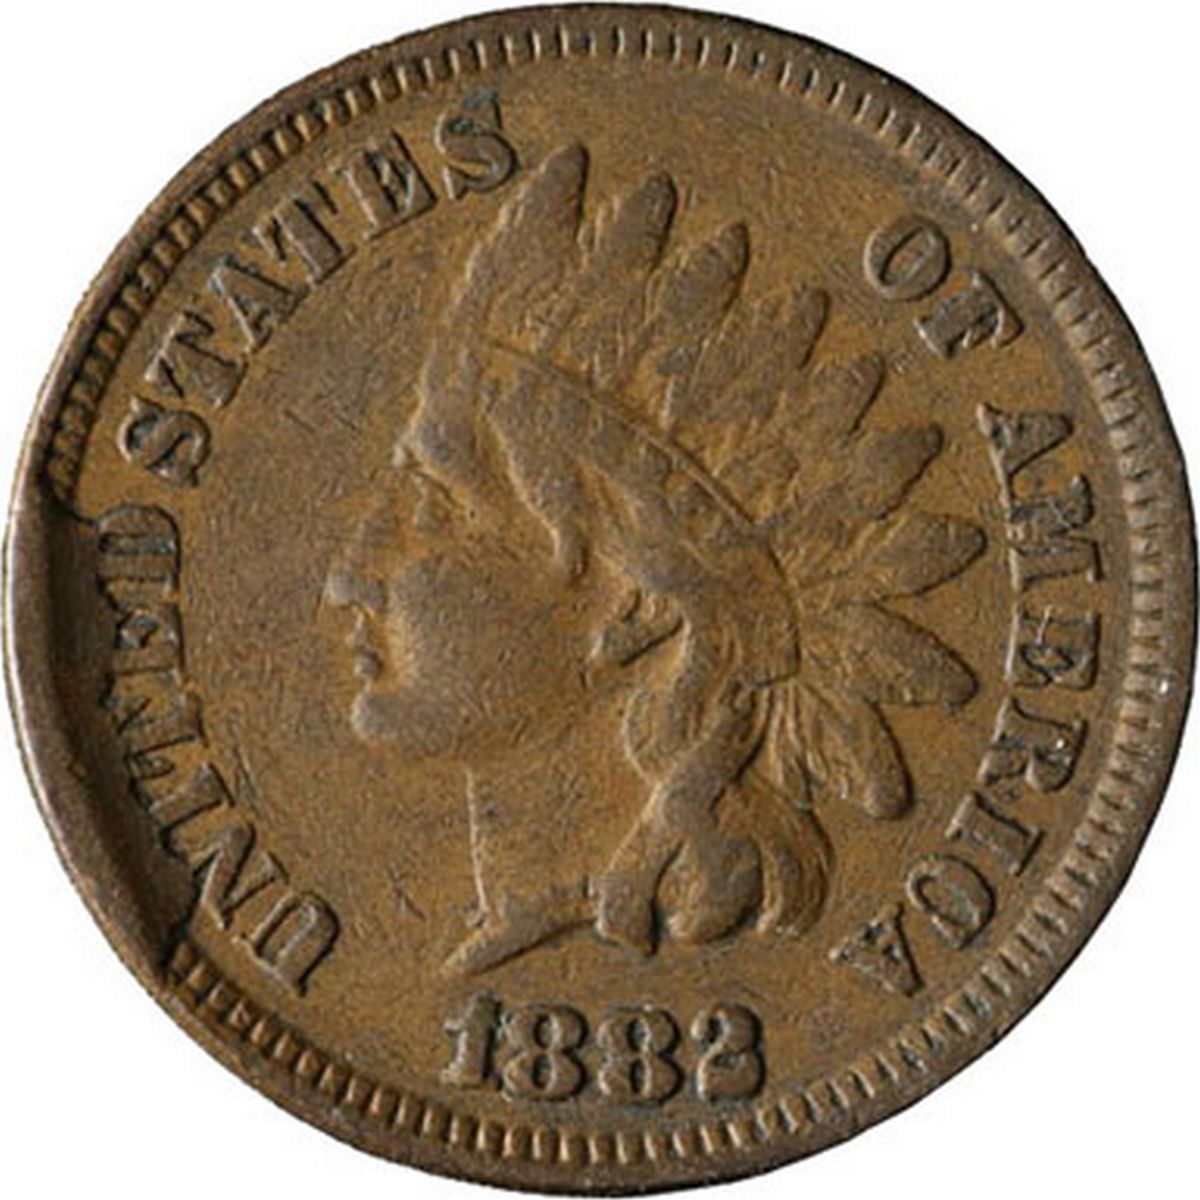 1882 CUD-001 - Indian Head Penny - Photo by David Poliquin